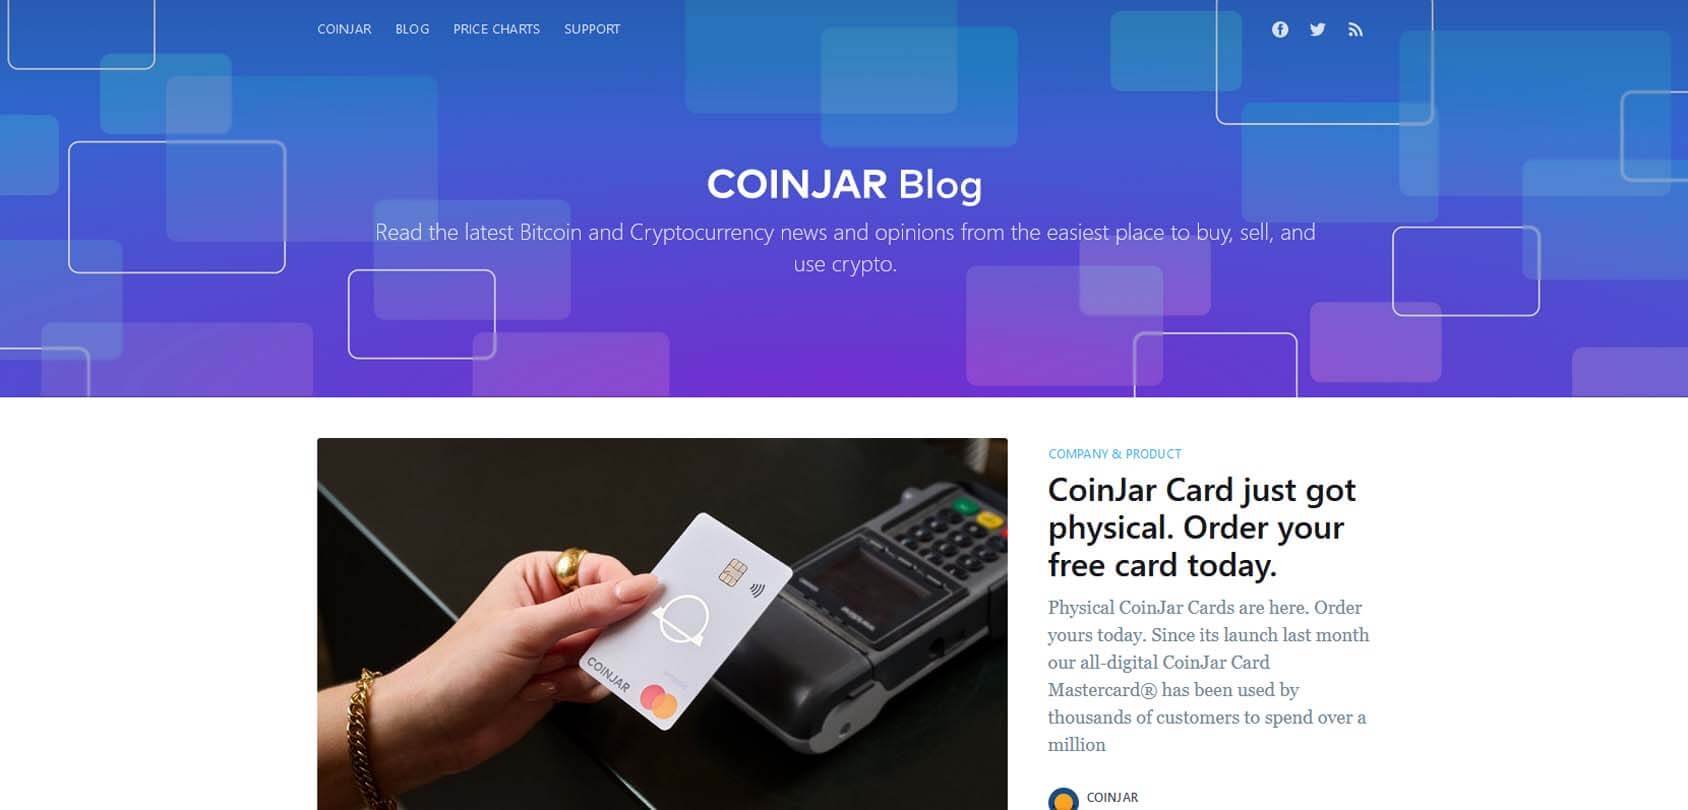 CoinJar Blog Homepage